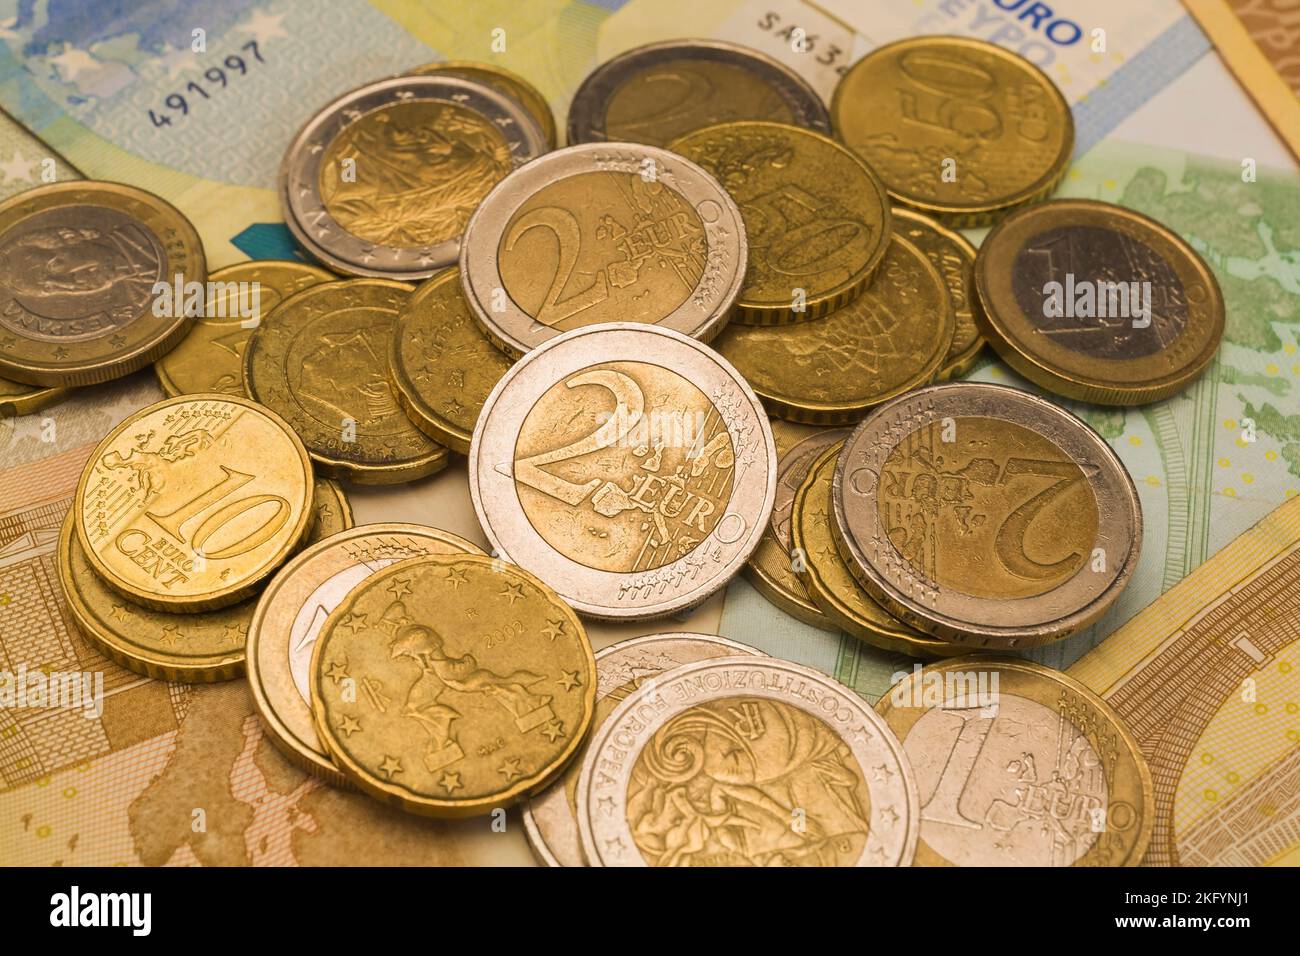 Diverses pièces en euros sur les billets de banque en euros. Banque D'Images